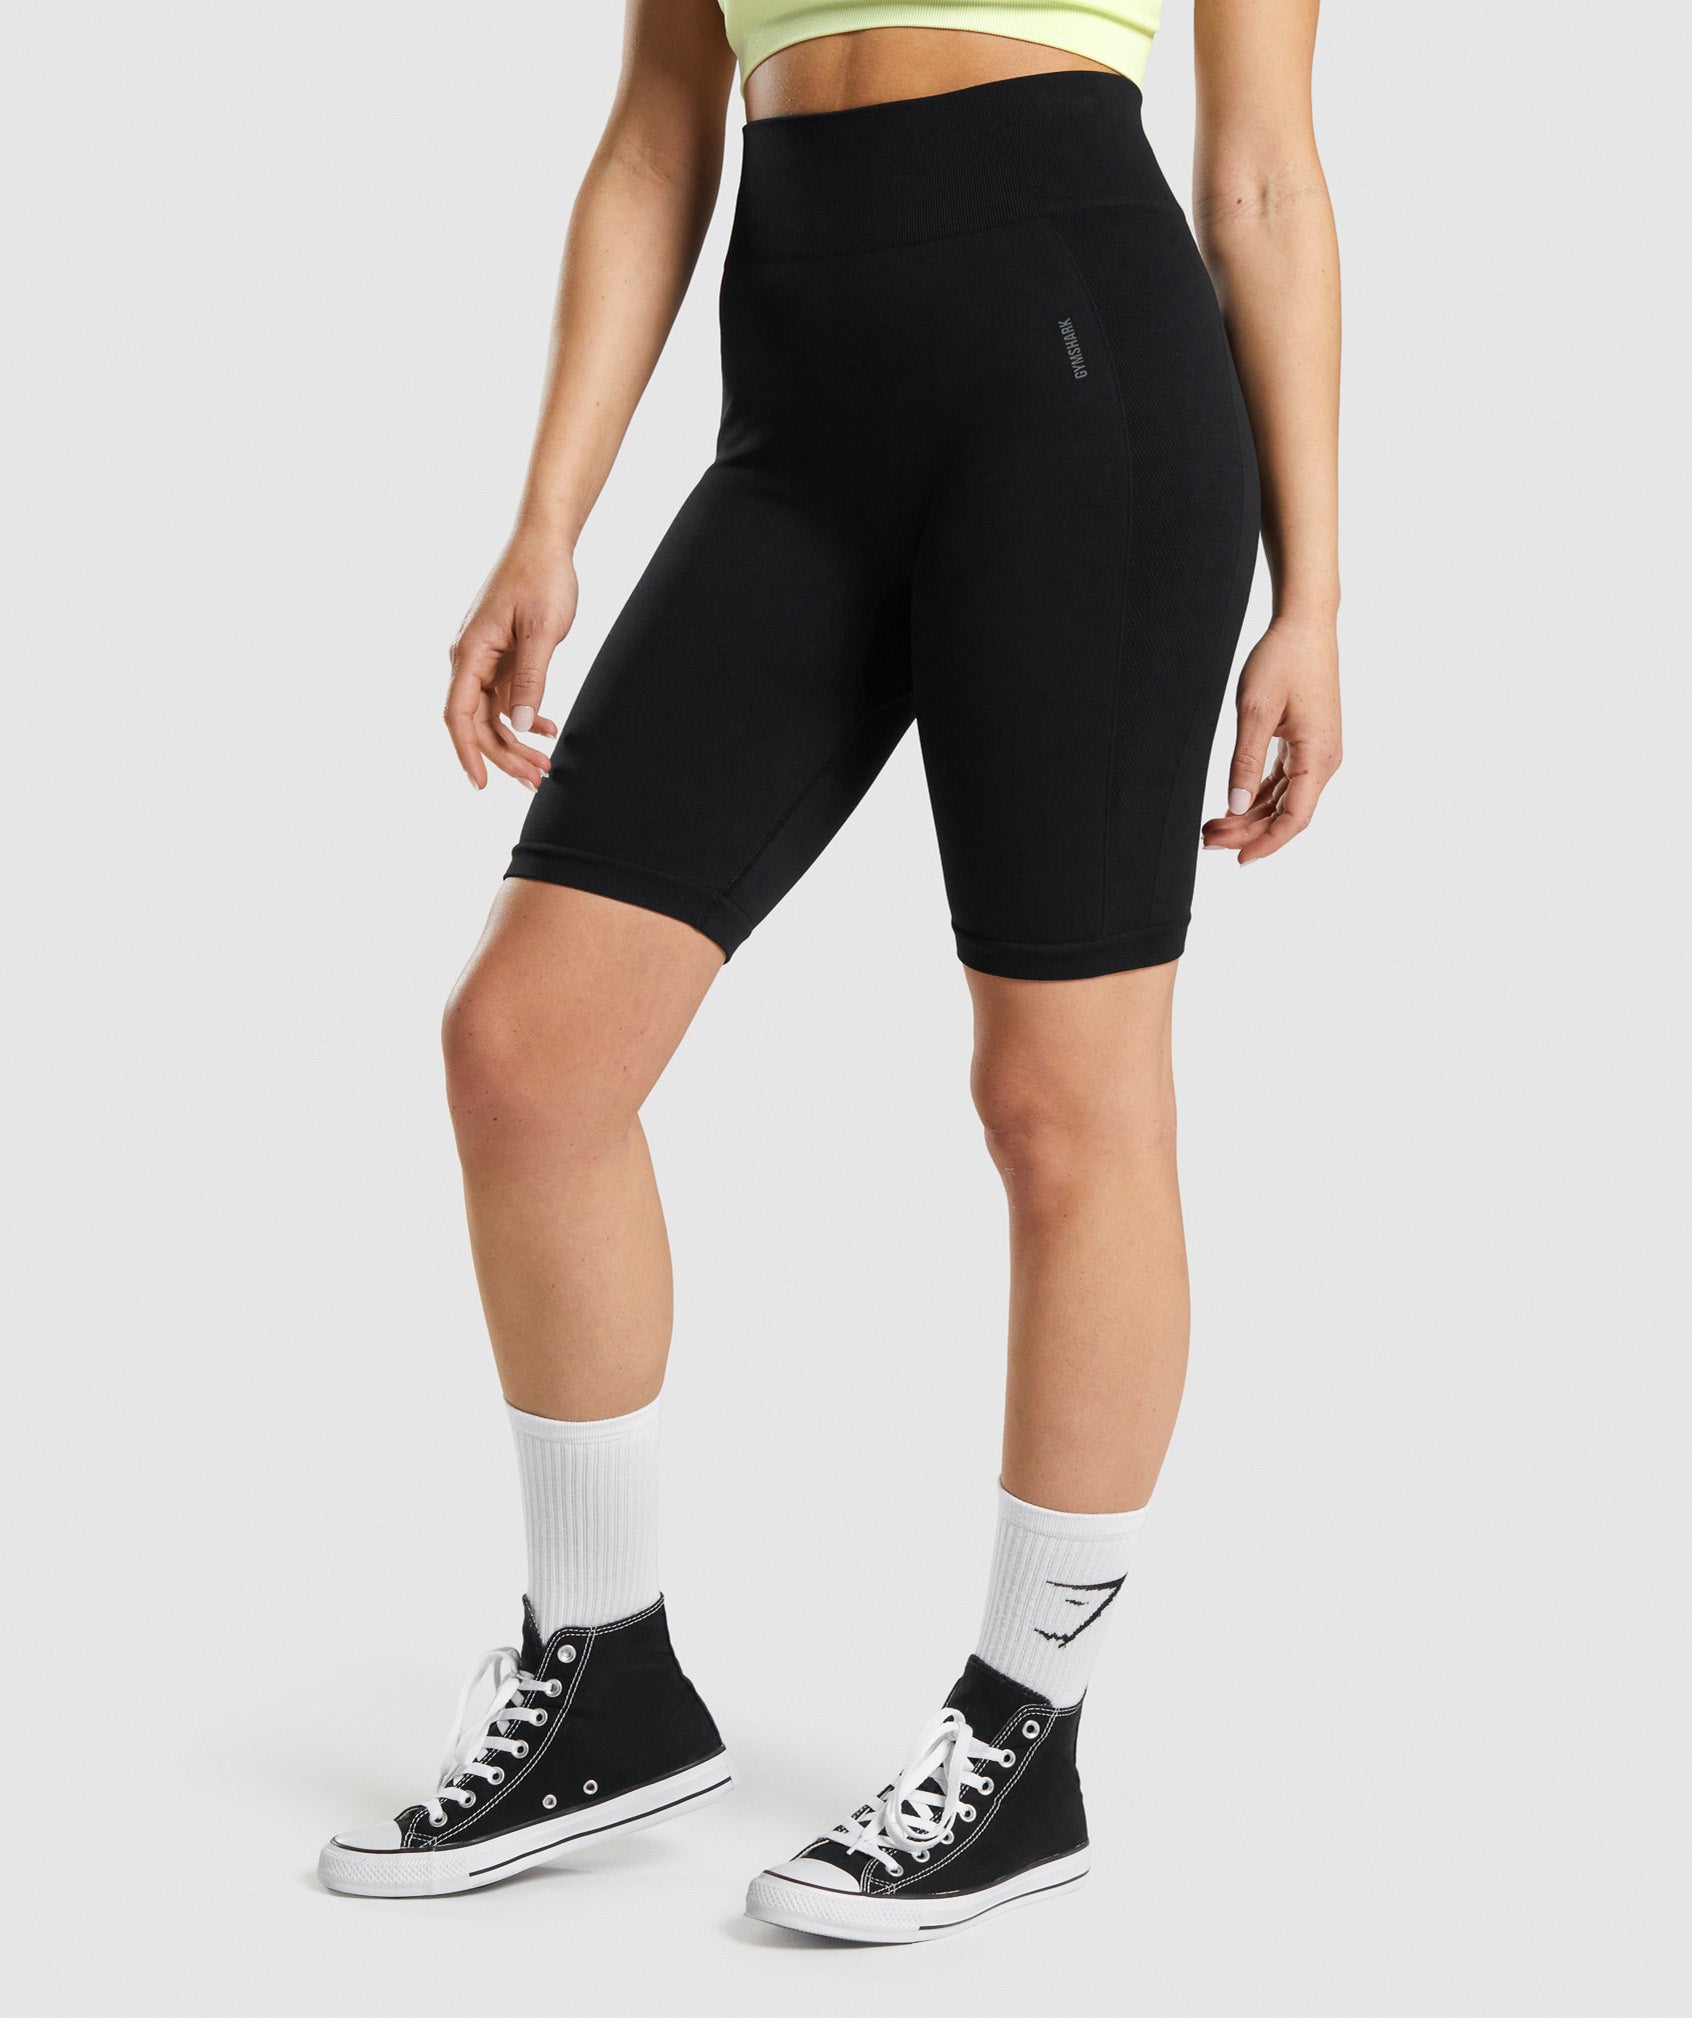 Gymshark Elevate Cycling Shorts - Black